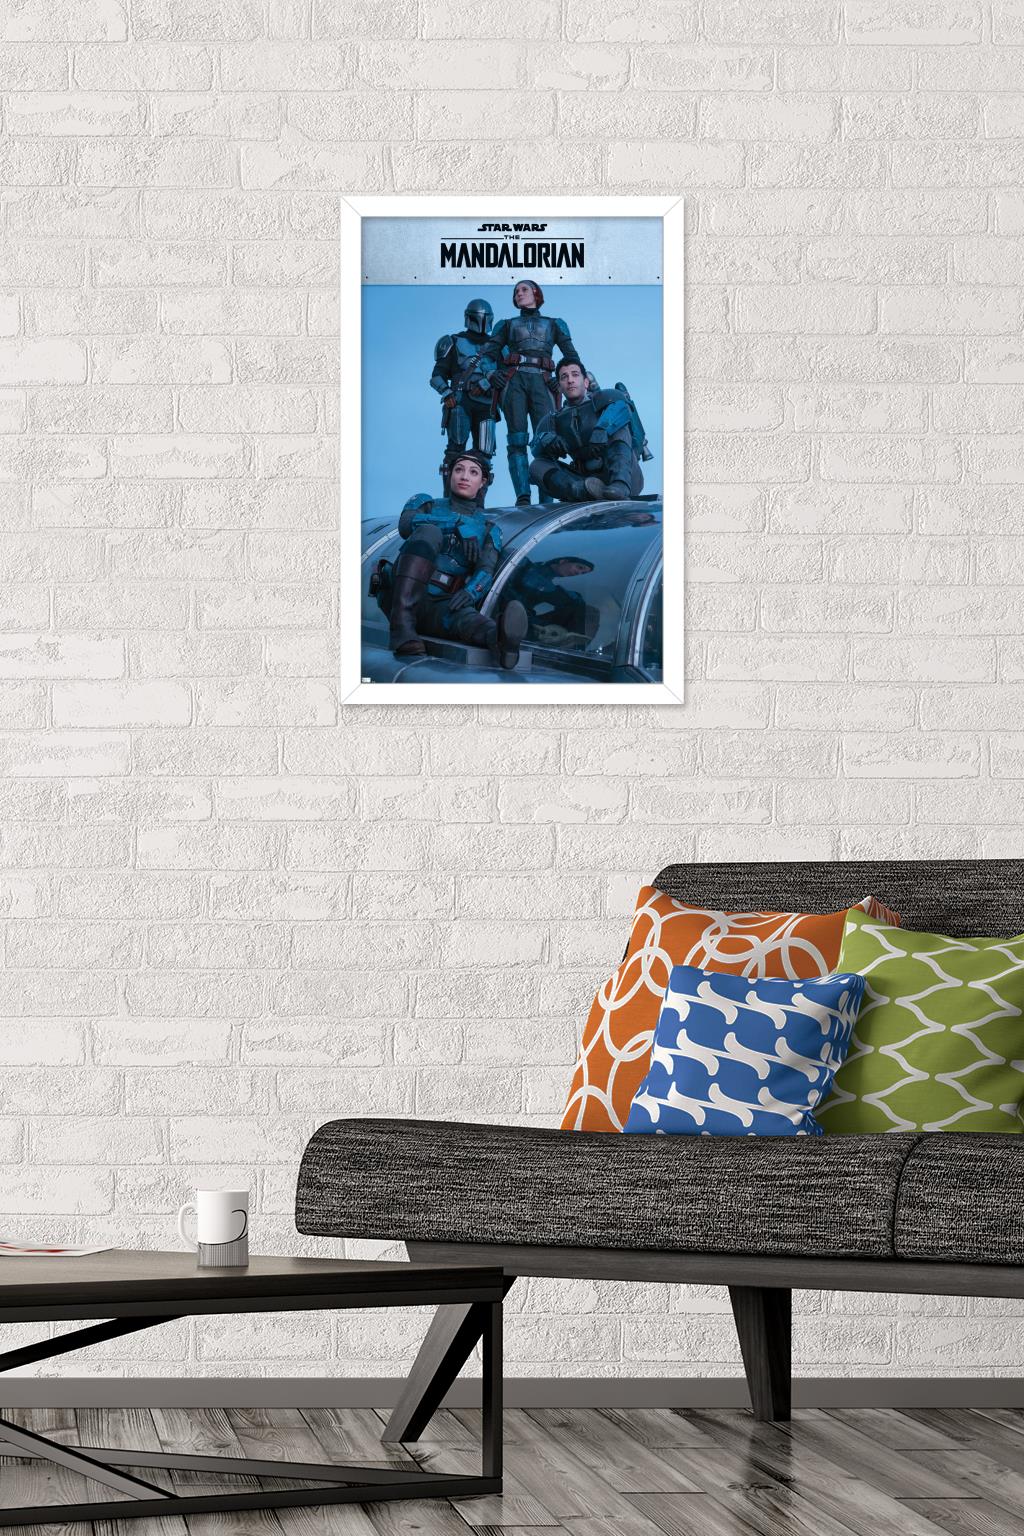 Star Wars: The Mandalorian Season 2 - Mandalorian Group Wall Poster, 14.725" x 22.375", Framed - image 2 of 5